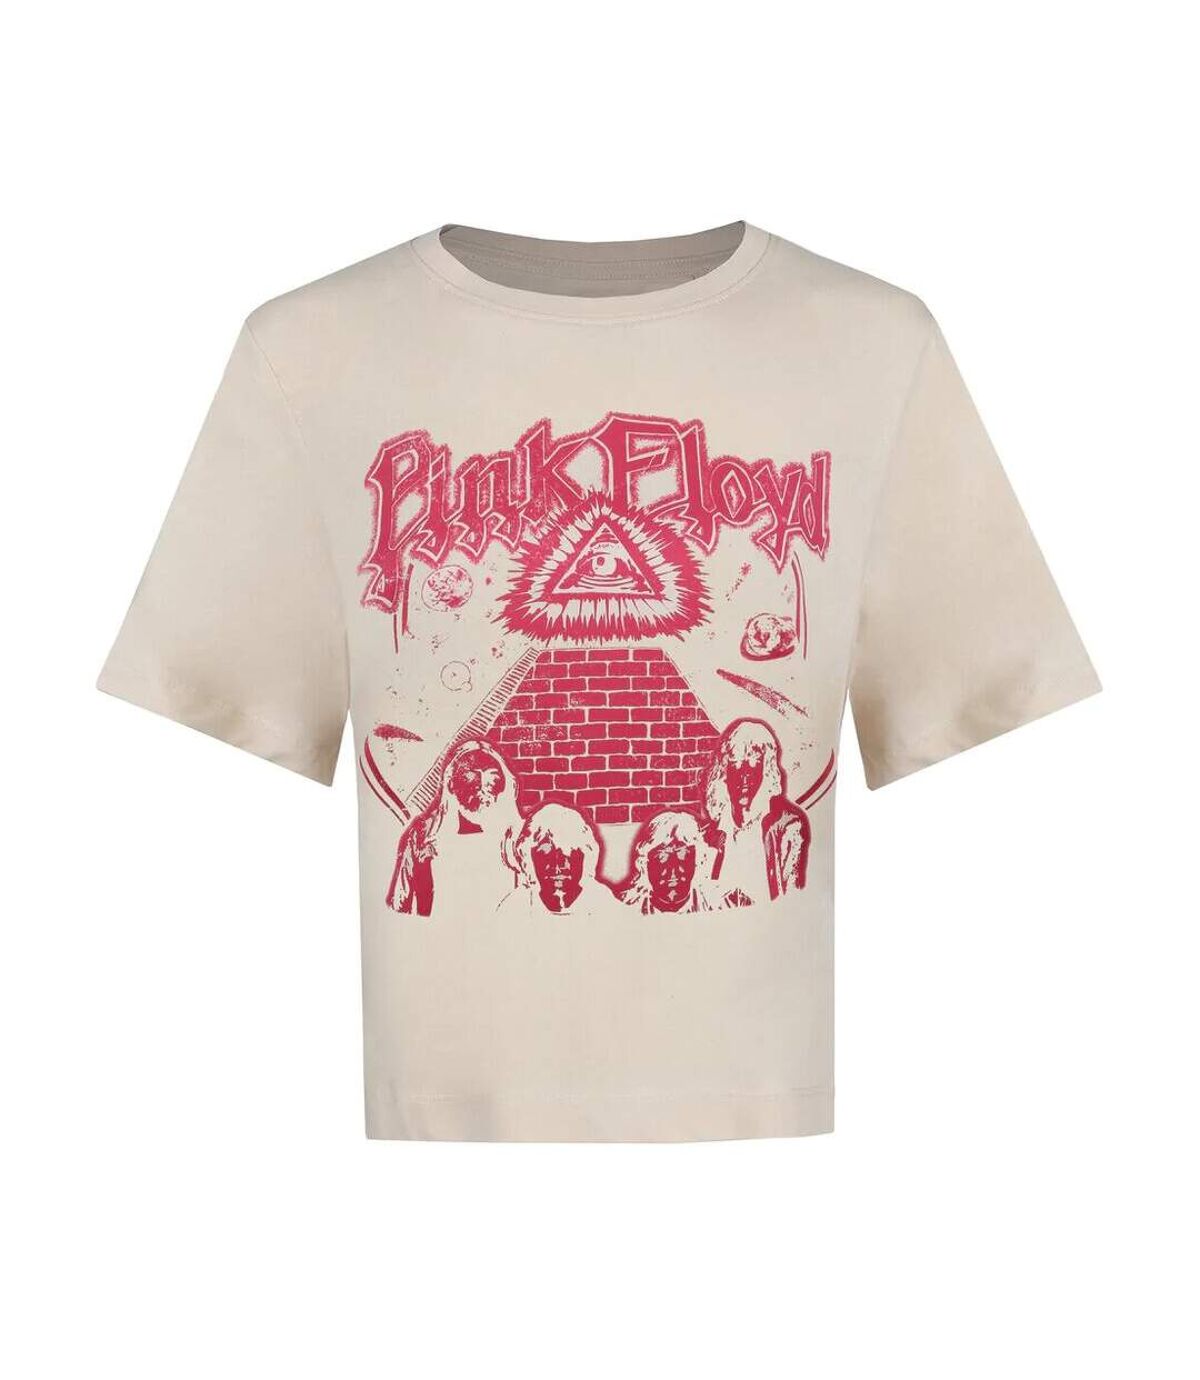 Pink Floyd - T-shirt court ALL SEEING EYE - Femme (Beige) - UTTV848